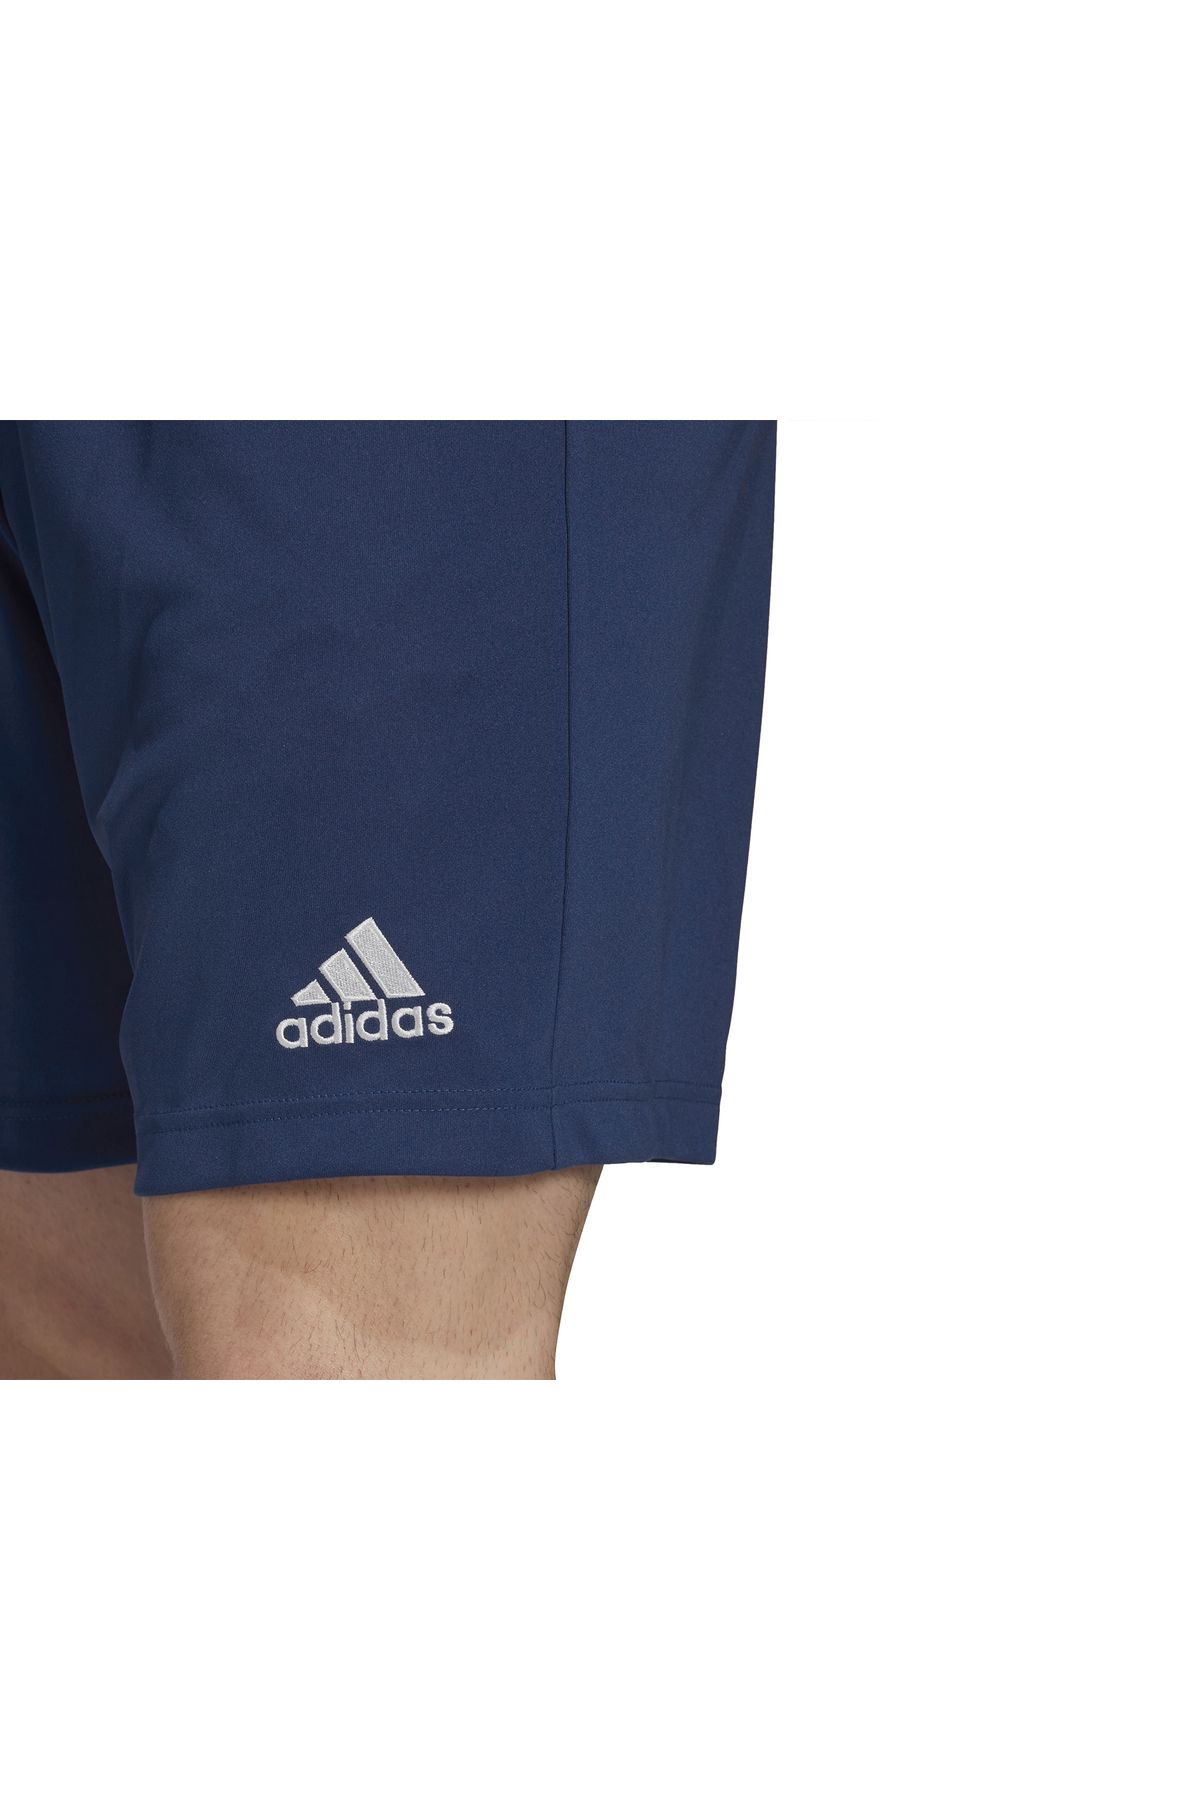 adidas Ent22 Sho Men\'s H57506 Blue Navy Trendyol - Shorts